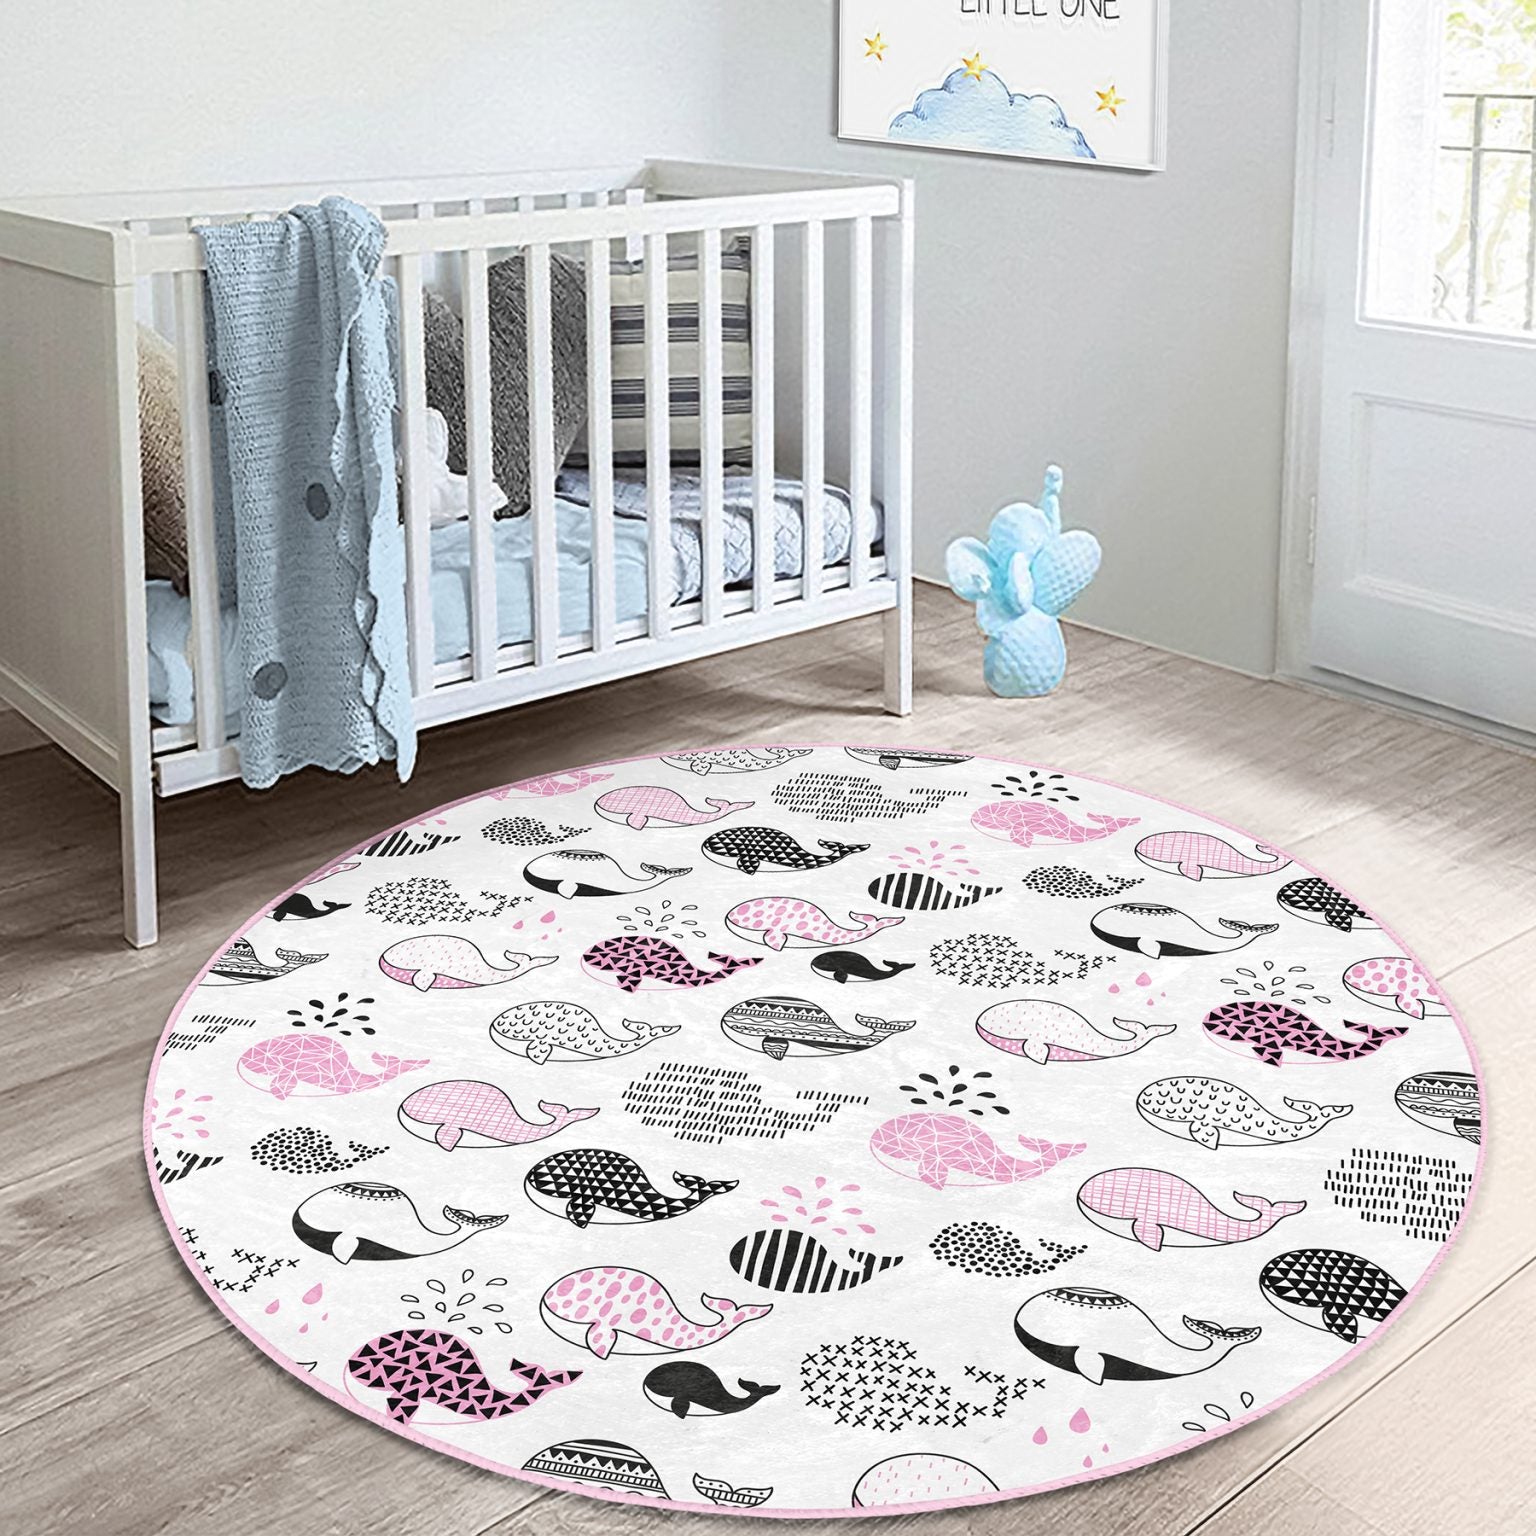 Homeezone's Pink Whale Pattern Baby Room Floor Mat